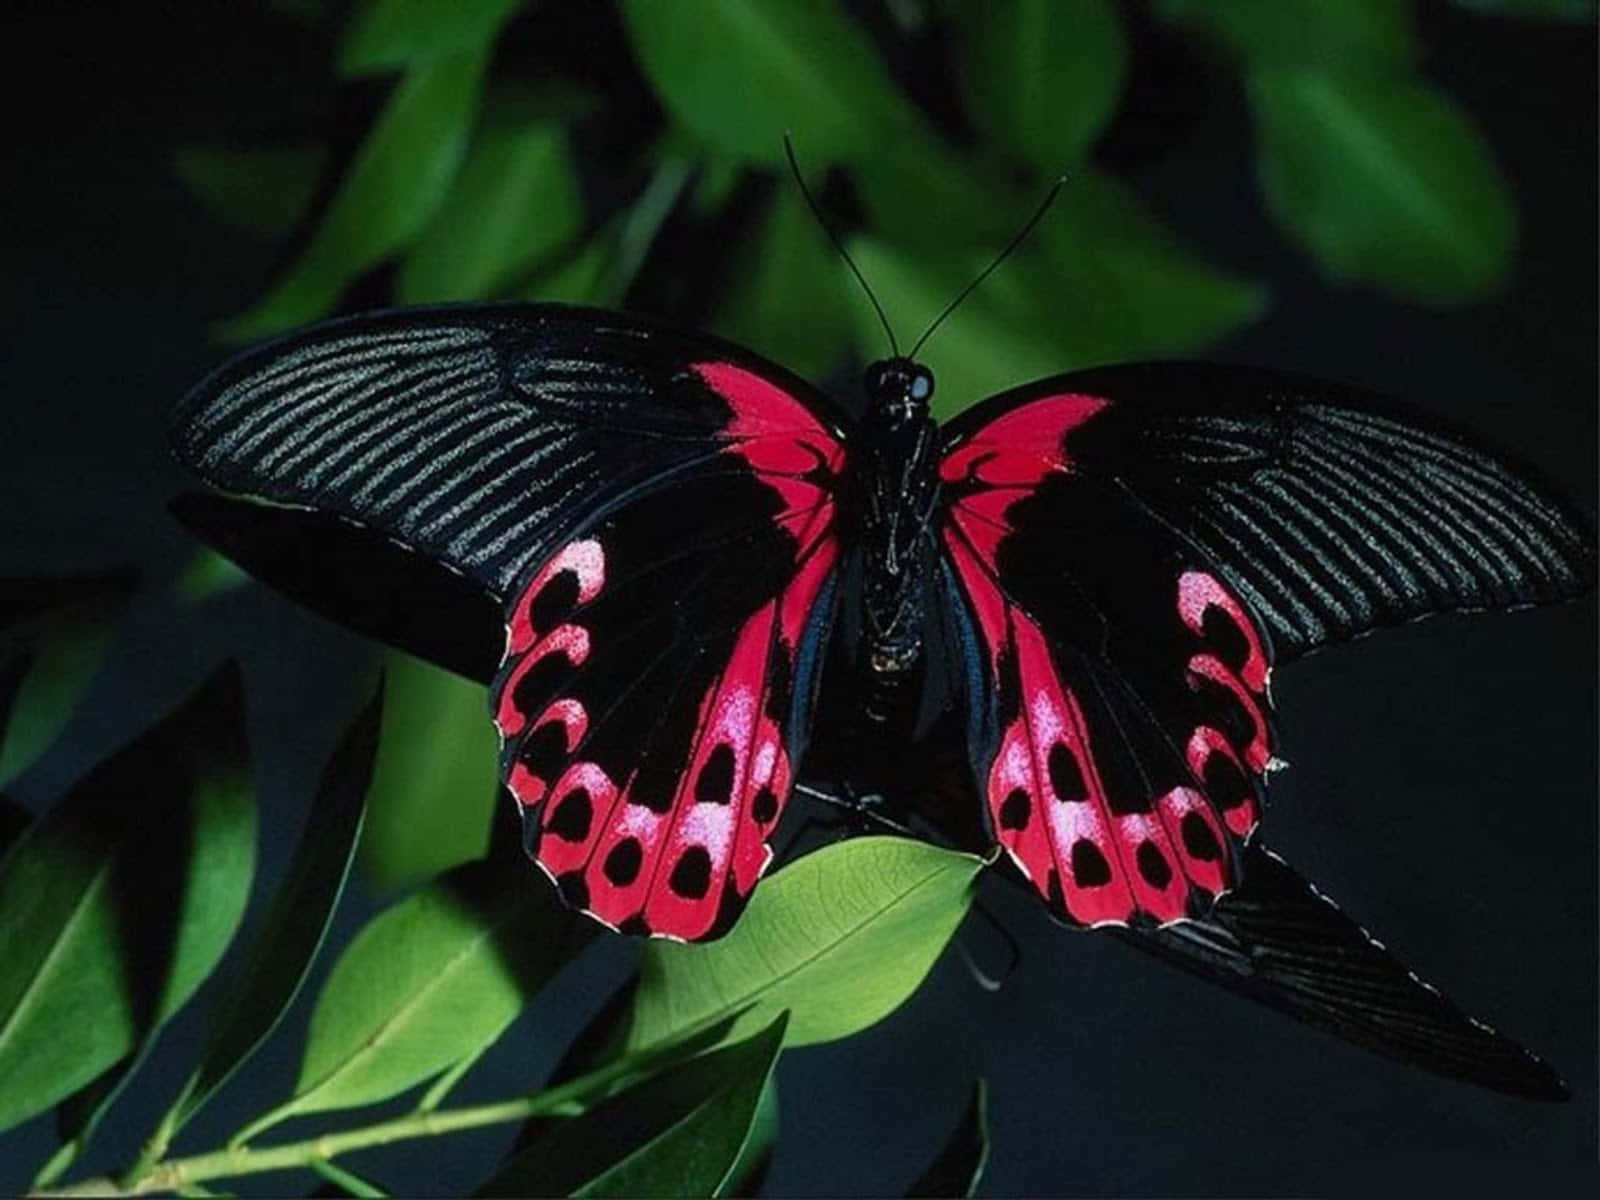 A Beautiful Butterfly Spreads its Wings Ready to Take Flight